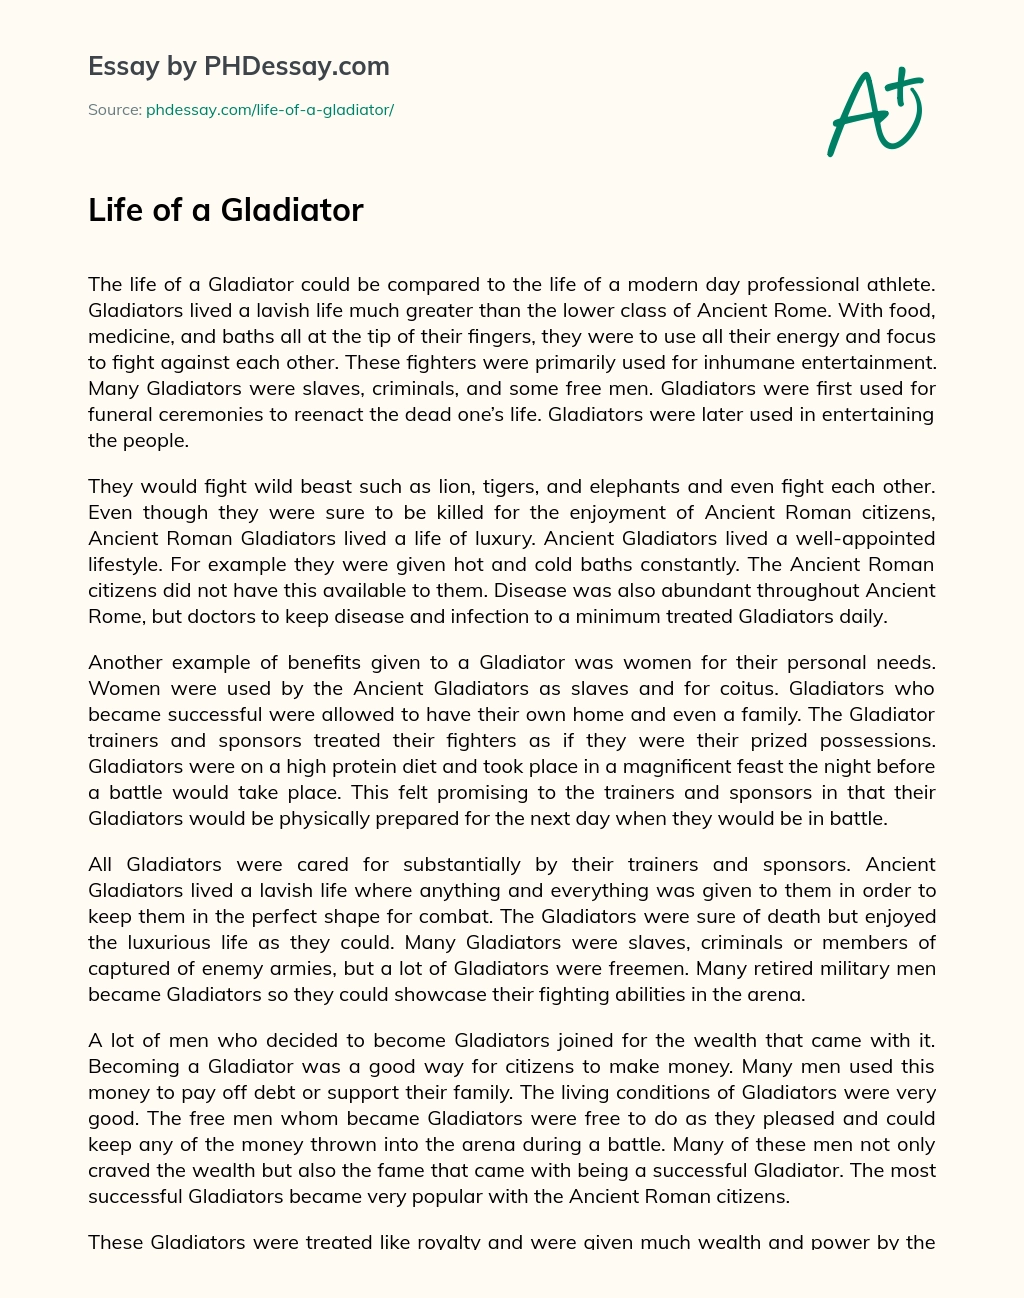 Life of a Gladiator essay